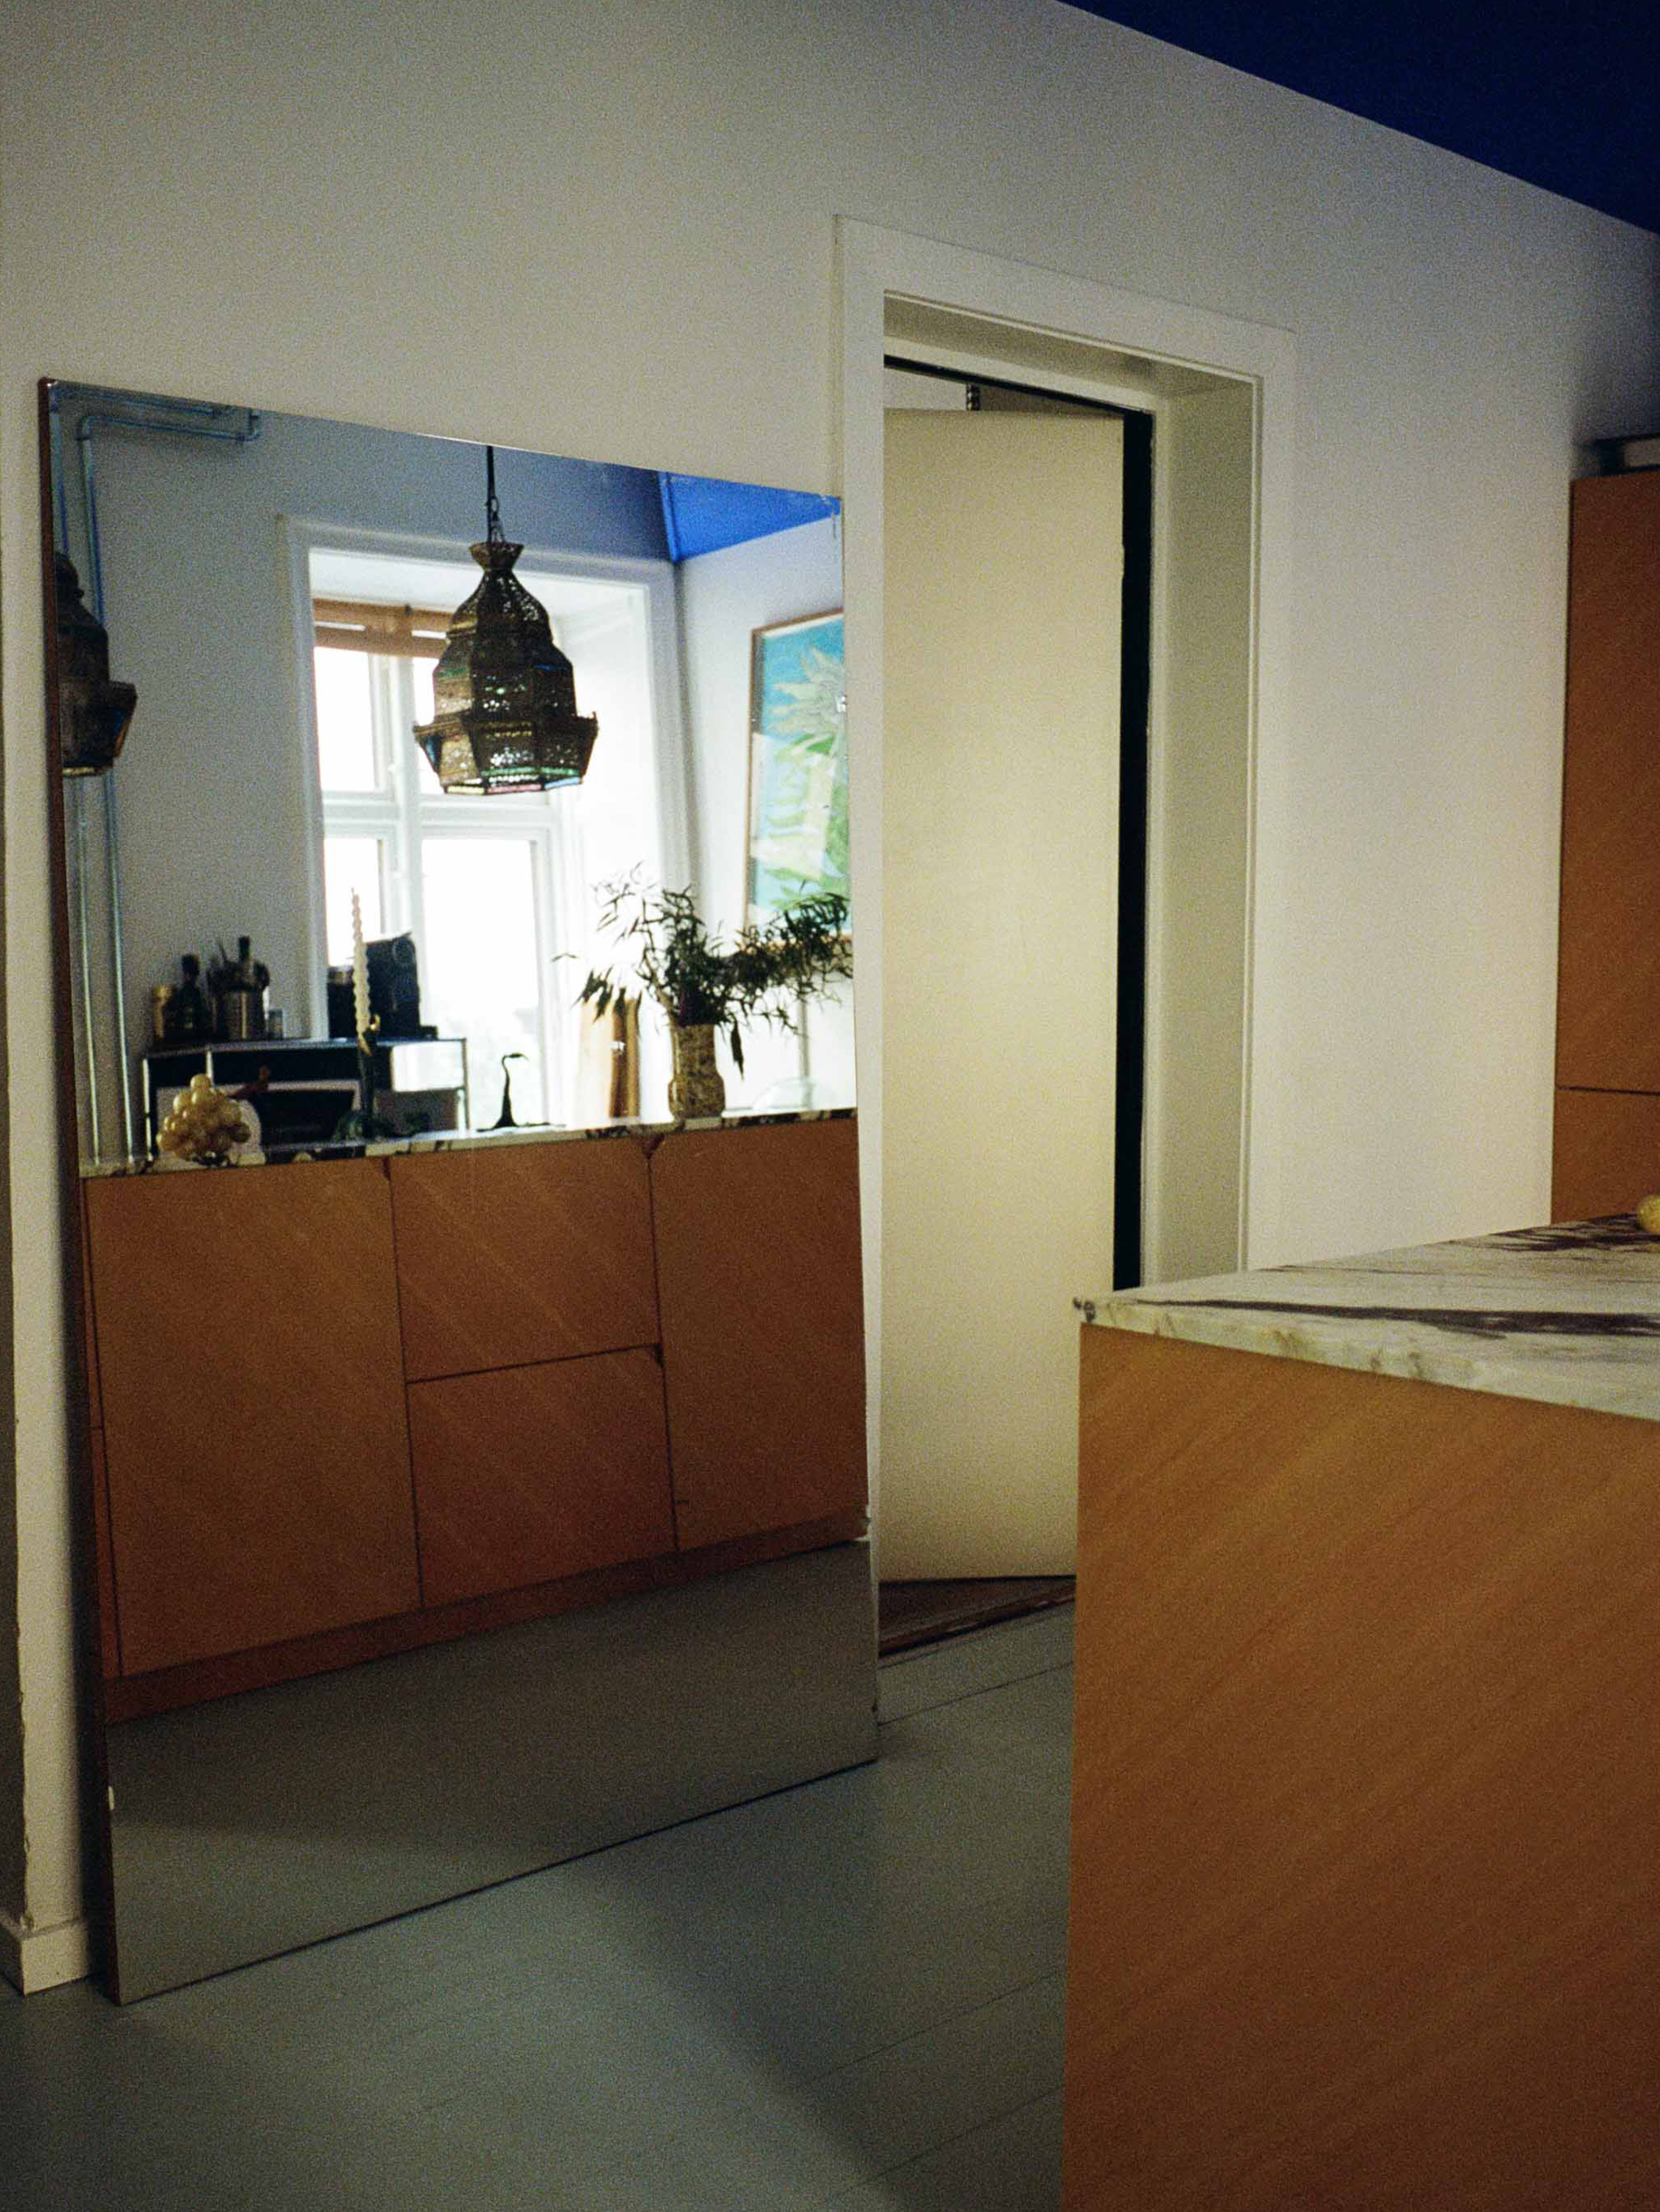 Mirror and DEGREE kitchen